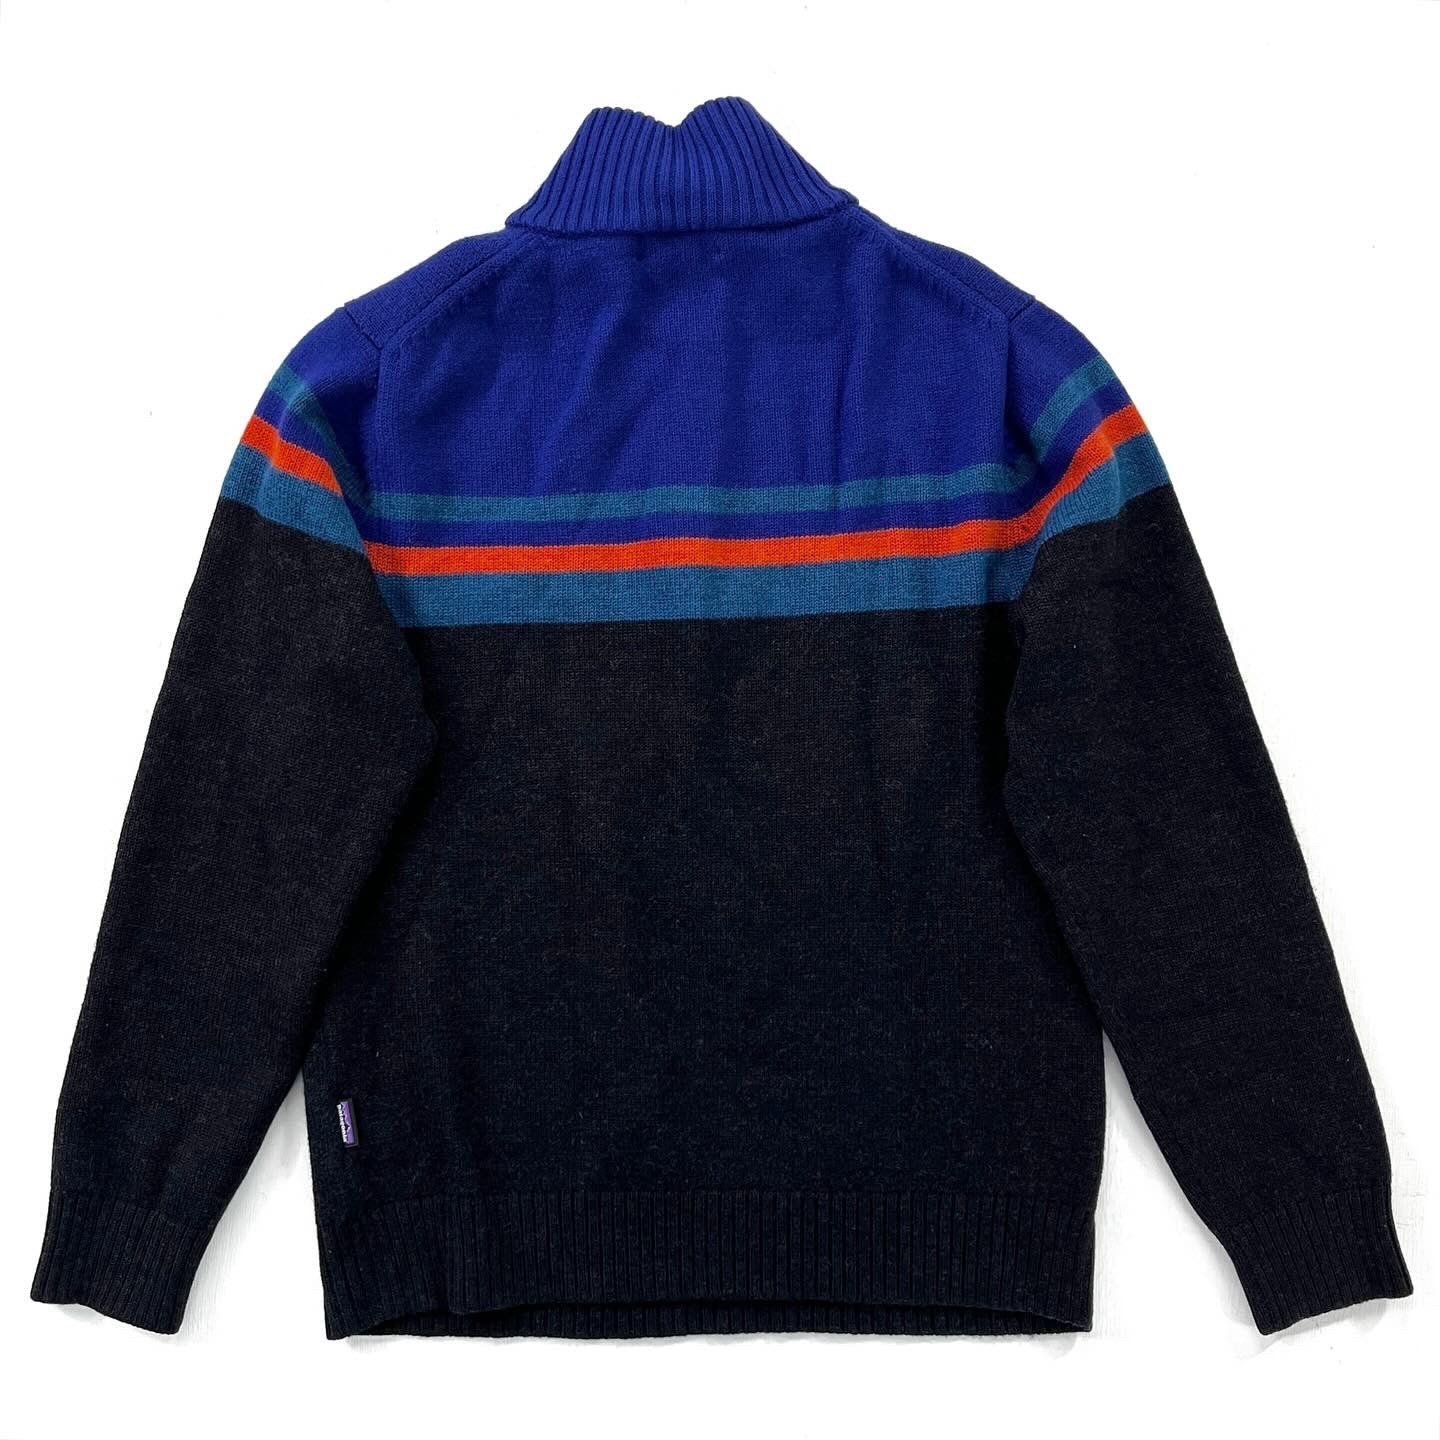 2016 Patagonia Half-Zip Merino Wool Sweater, Fitz Roy Print (XS)